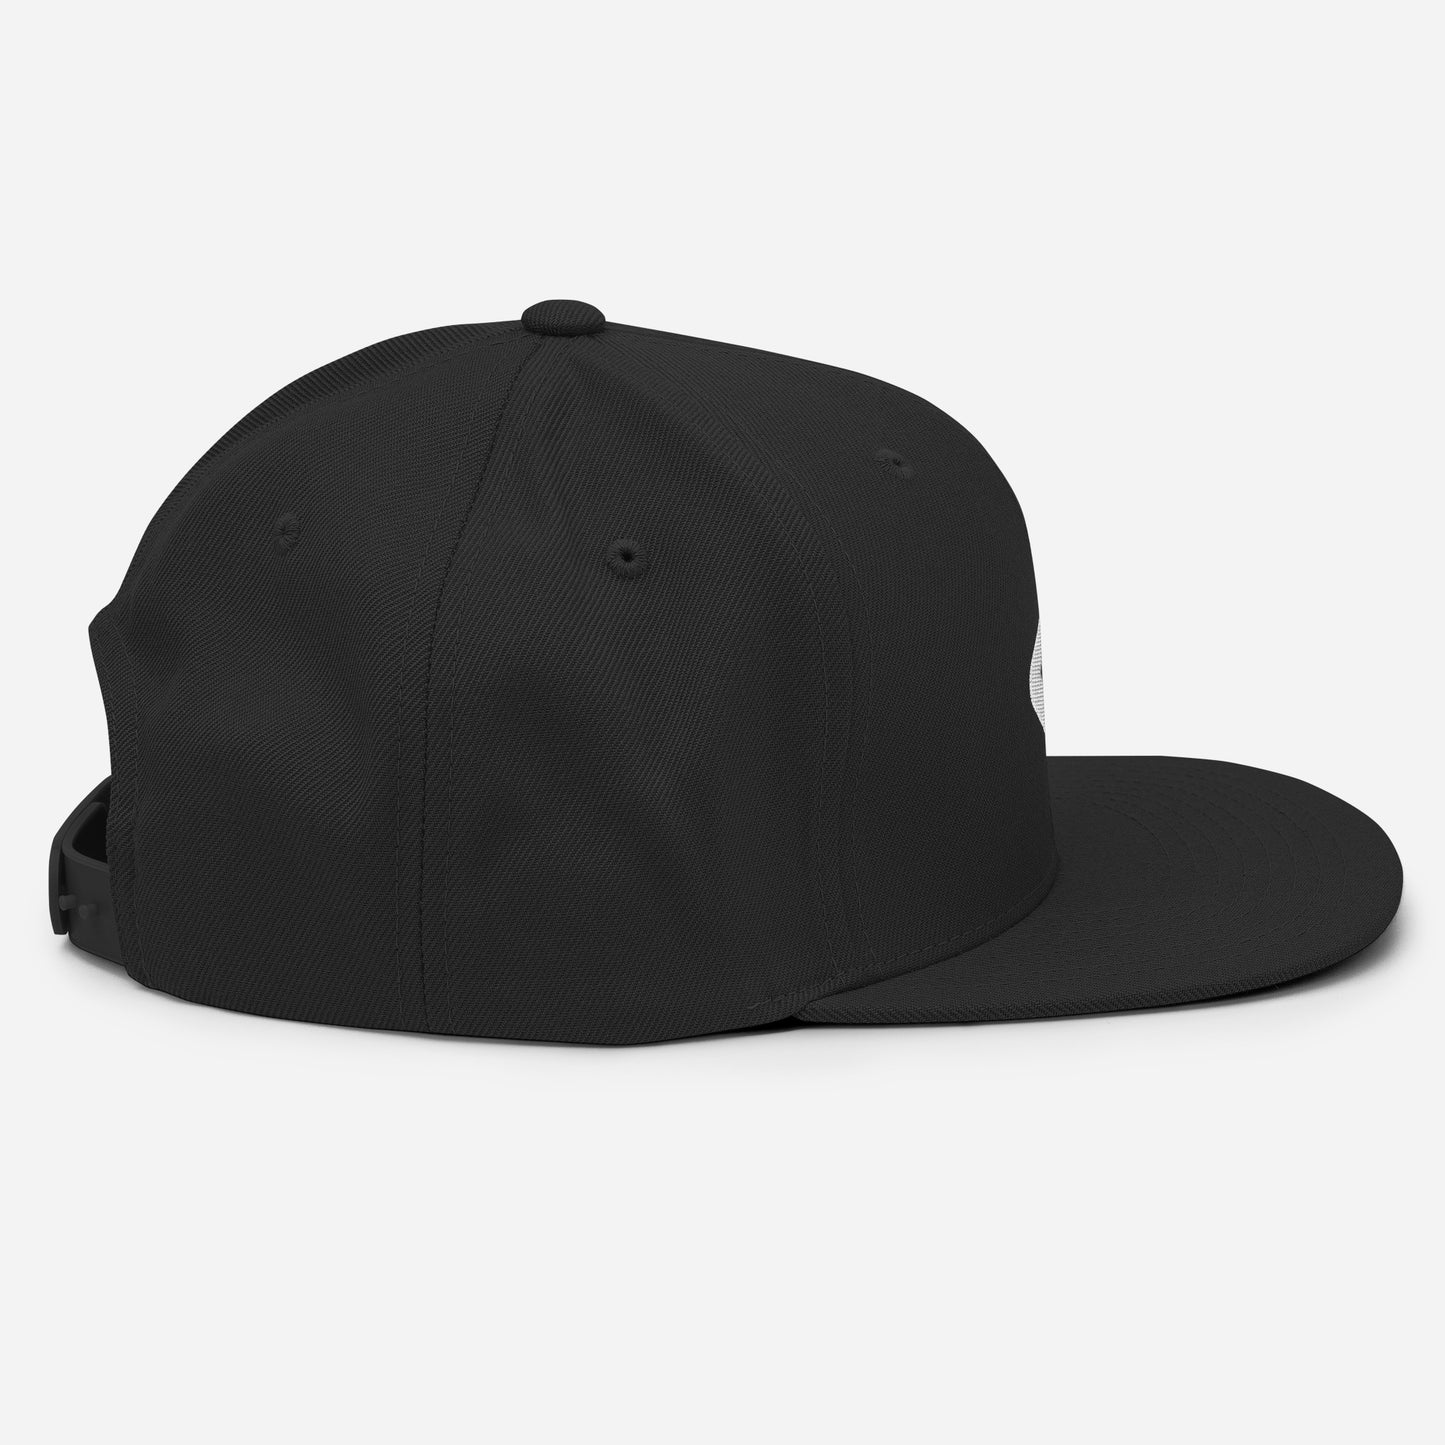 Marcellmar I Snapback Hat